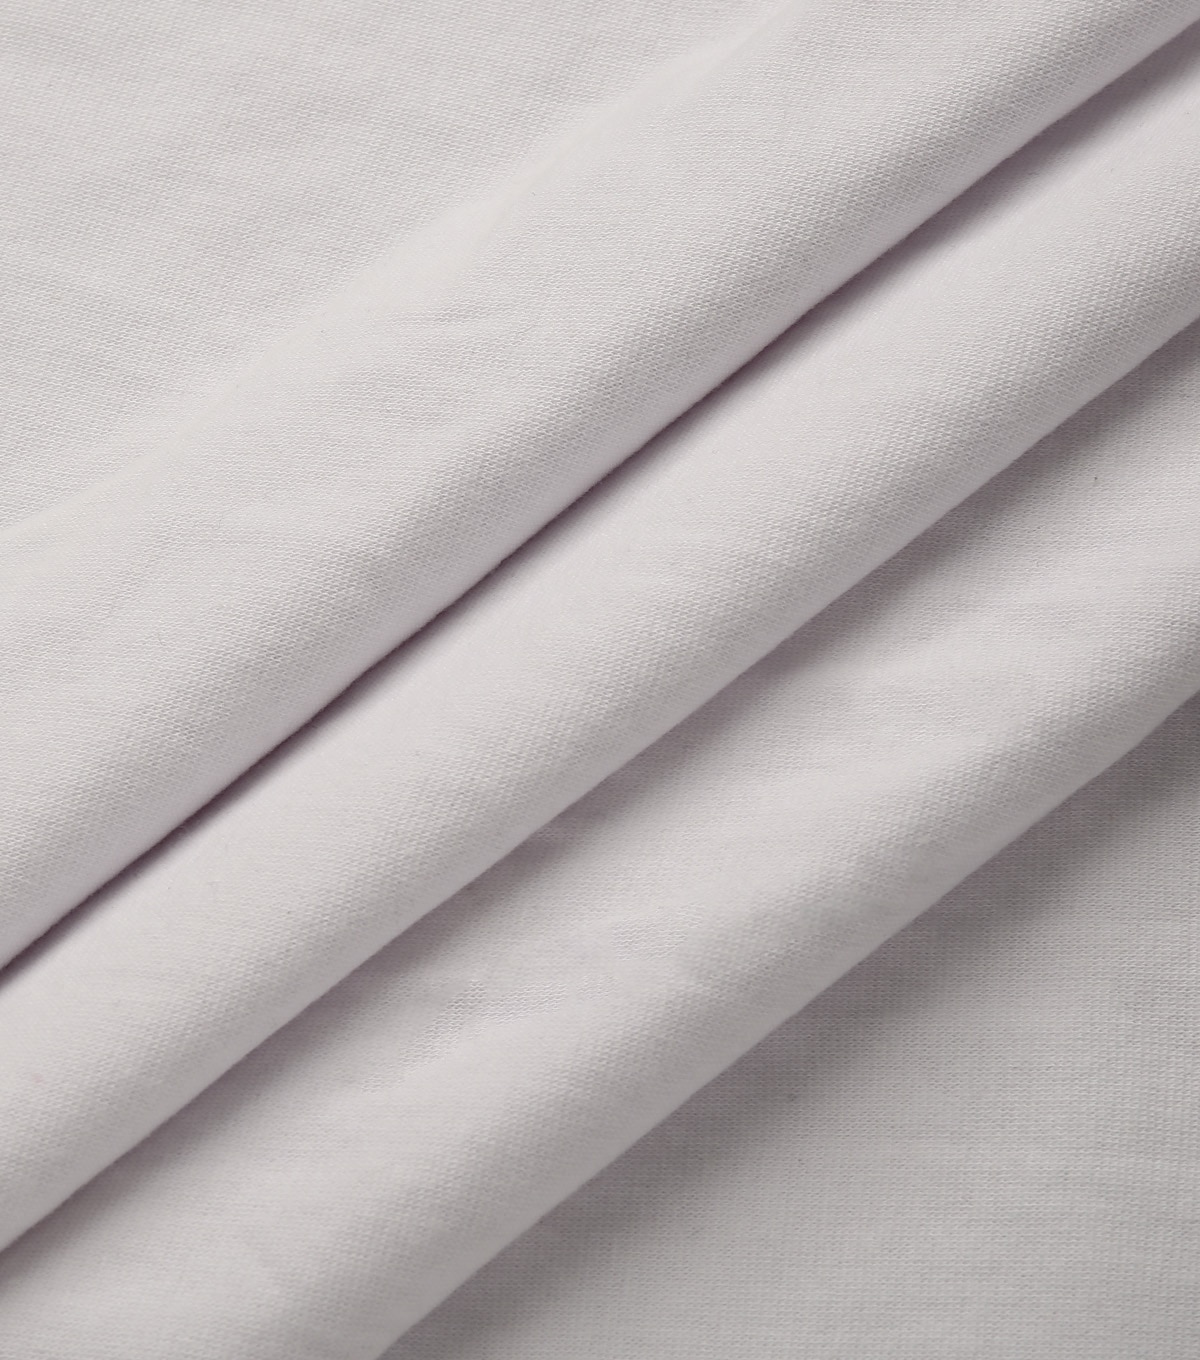 Rib Knit 1x1 Fabric White | JOANN